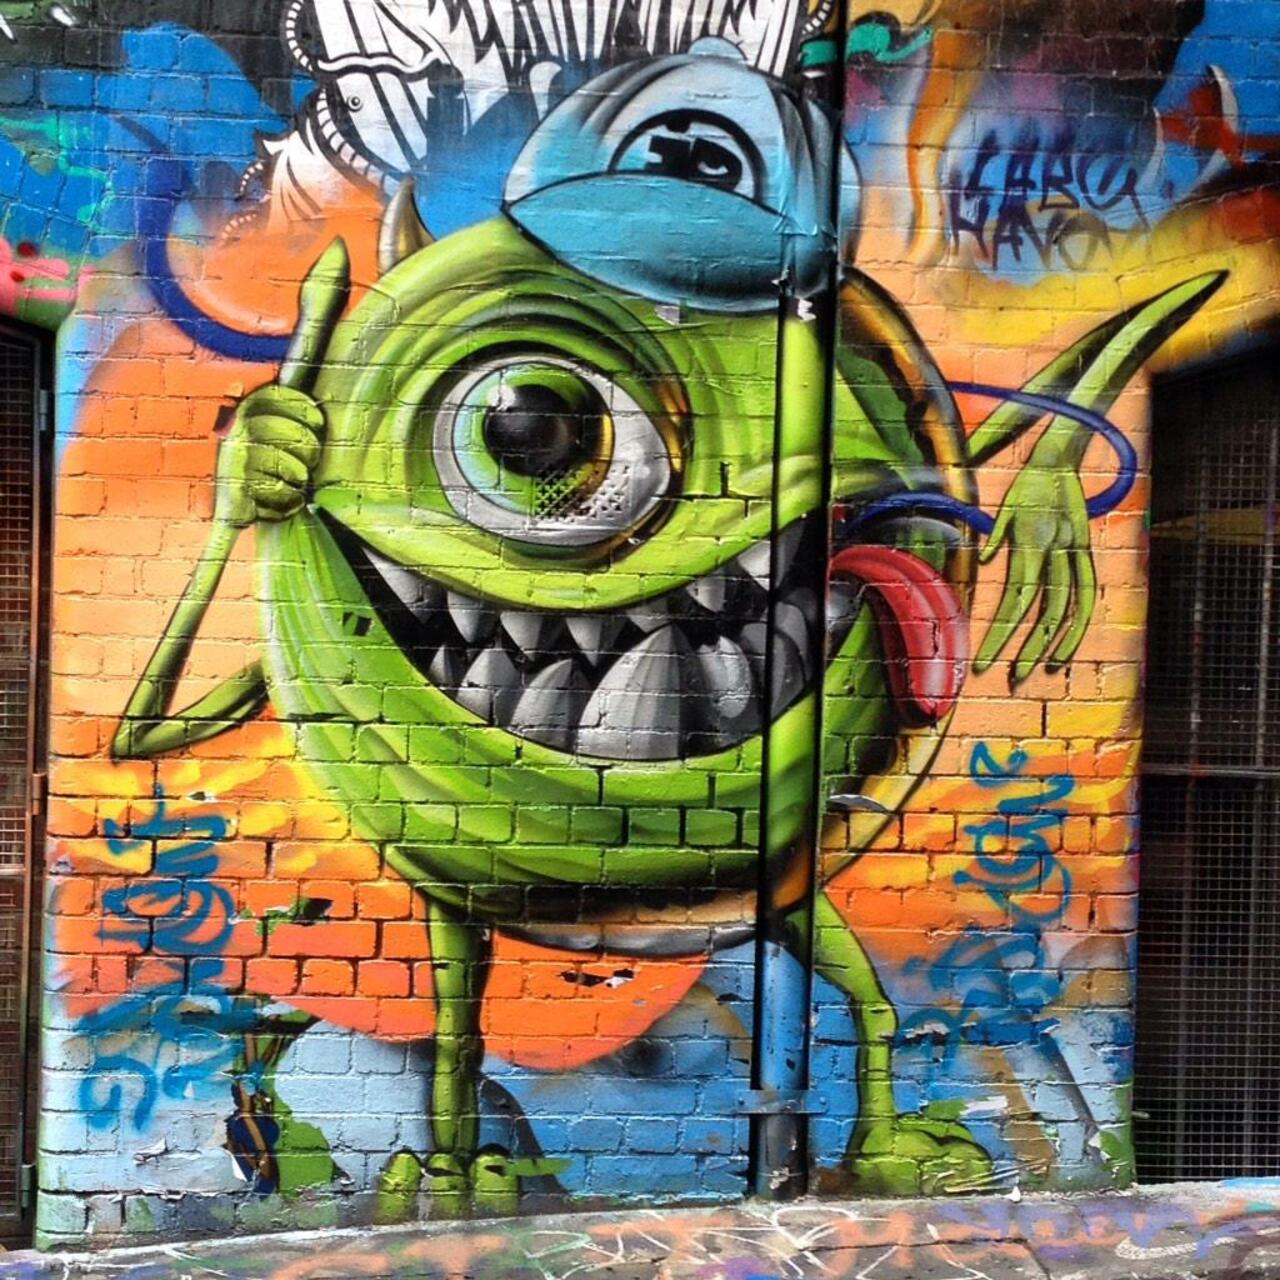 Coming to NP! MT @VGilliand: This popular work by #JackDouglas #JD Hosier Lane Melbourne #streetart #graffiti #mural http://t.co/ylUWzVi8nU